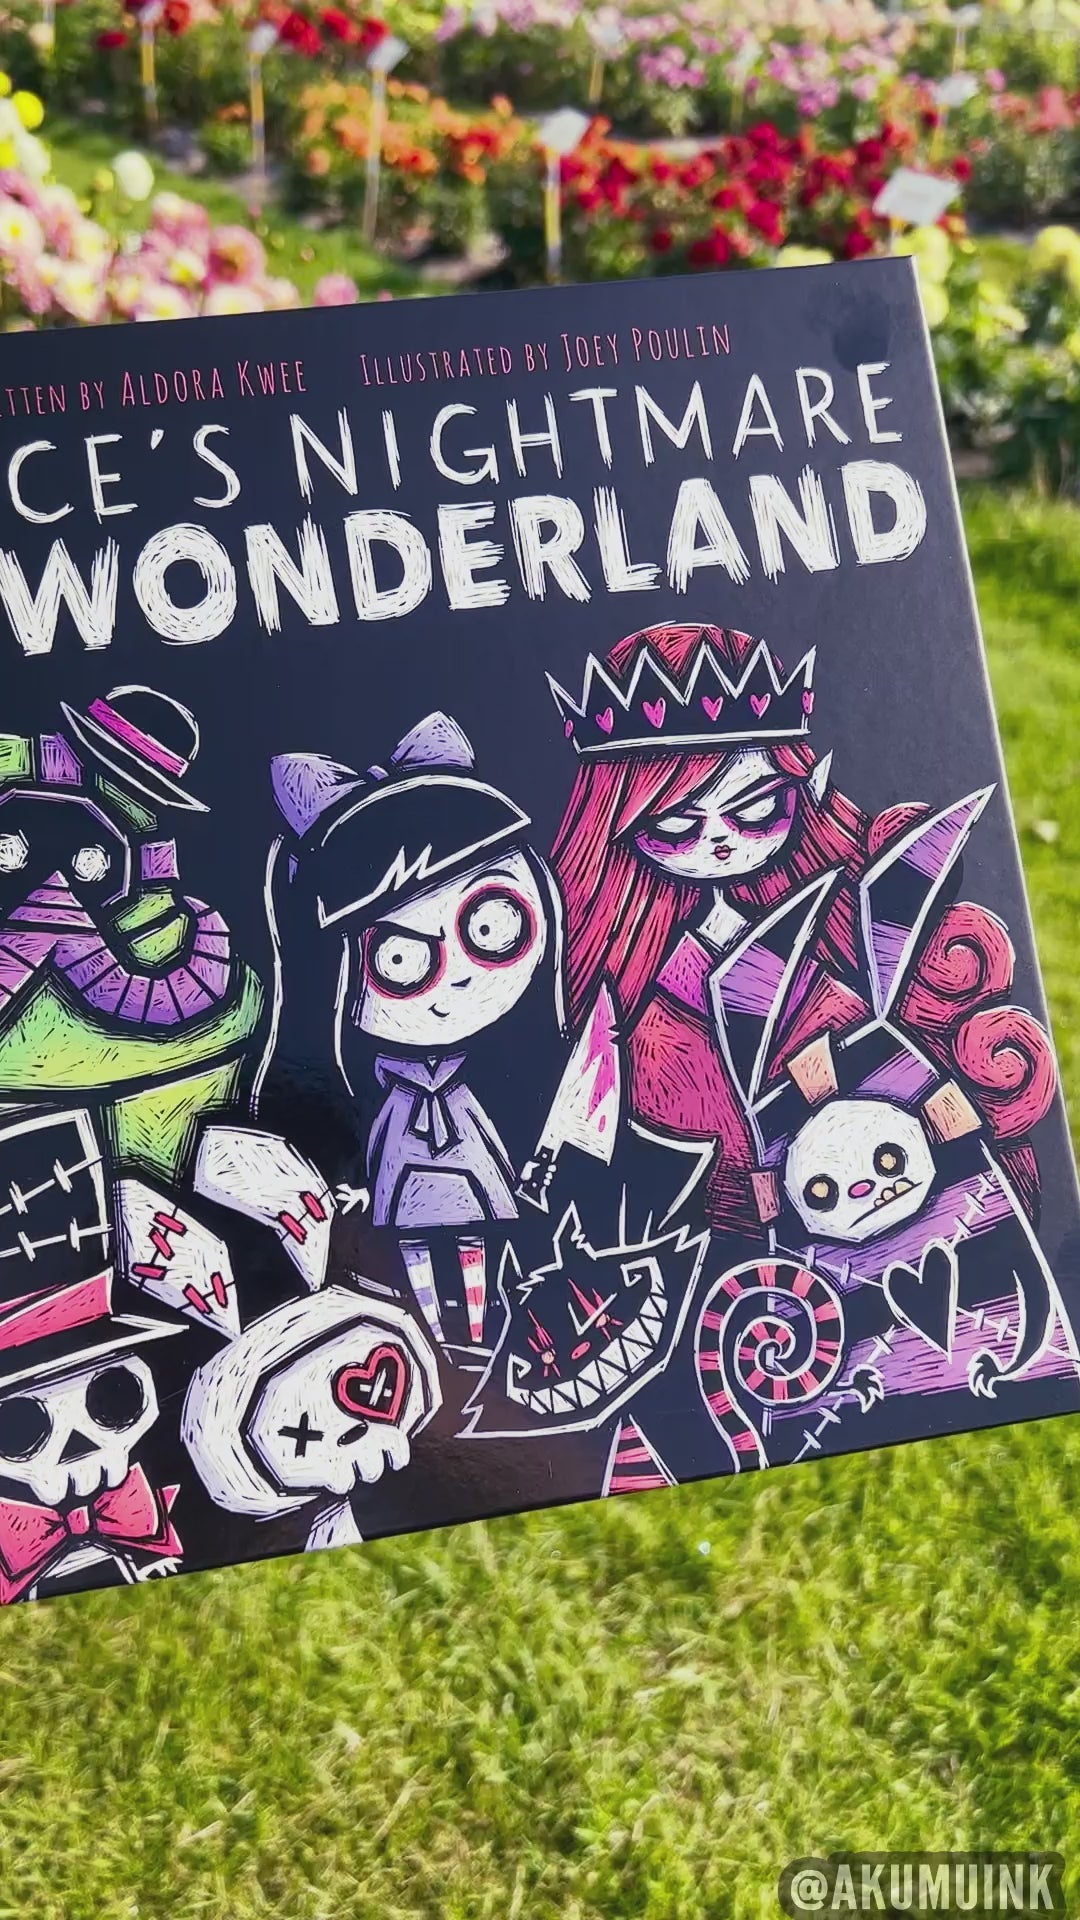 Alice's Nightmare in Wonderland Storybook